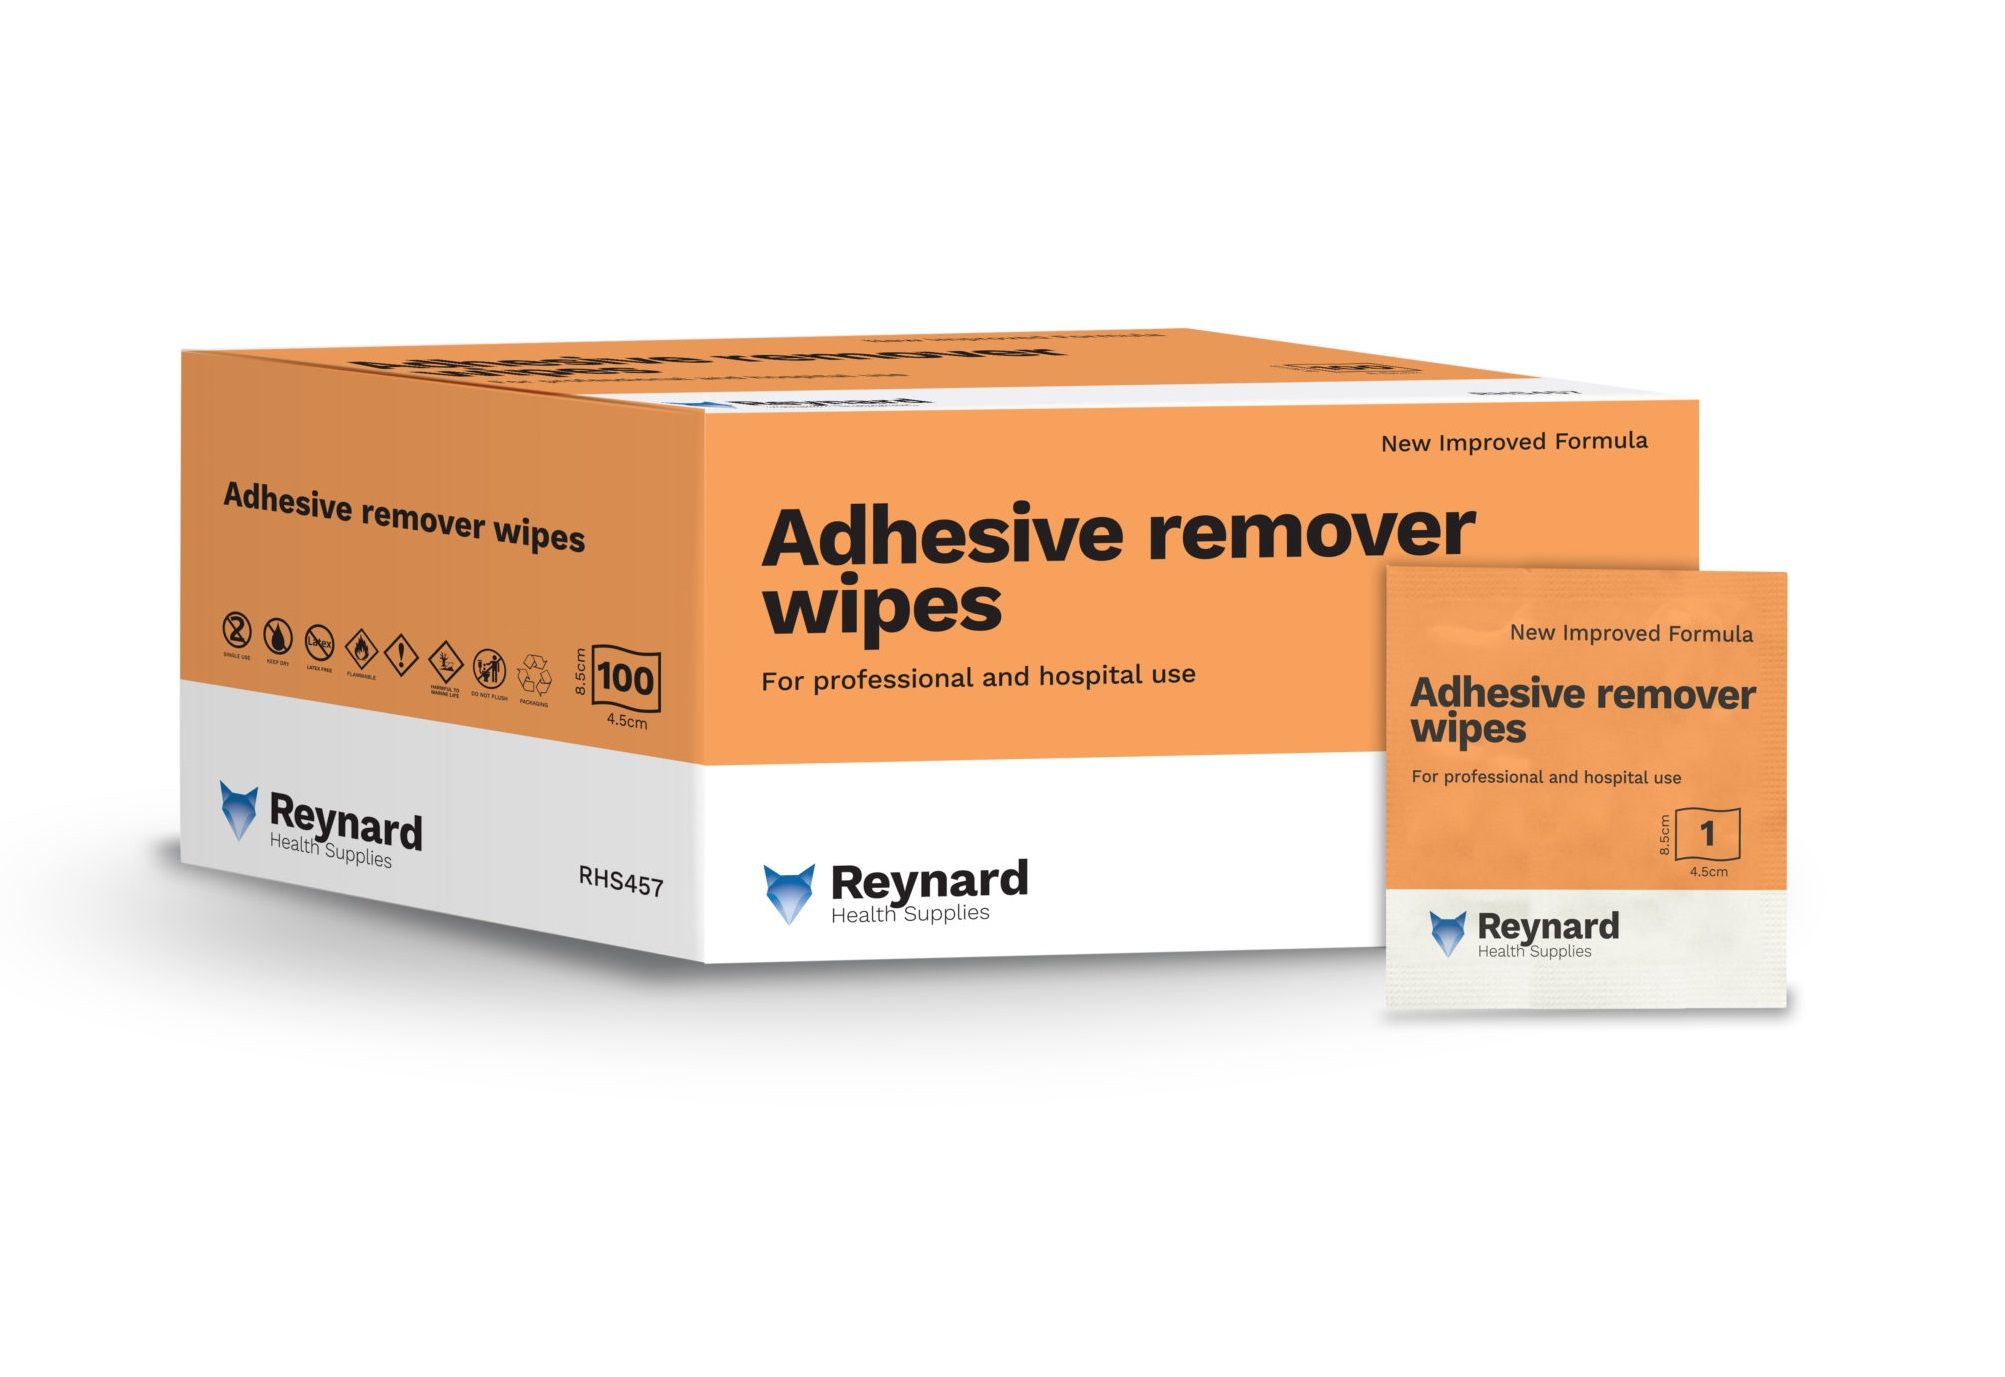 https://www.intuitivetherapeutics.co.nz/files/c12c6e63313539120f6e6935ba7bdd3dn/198/rhs-457-reynard-adhesive-remove-wipes_1.jpg